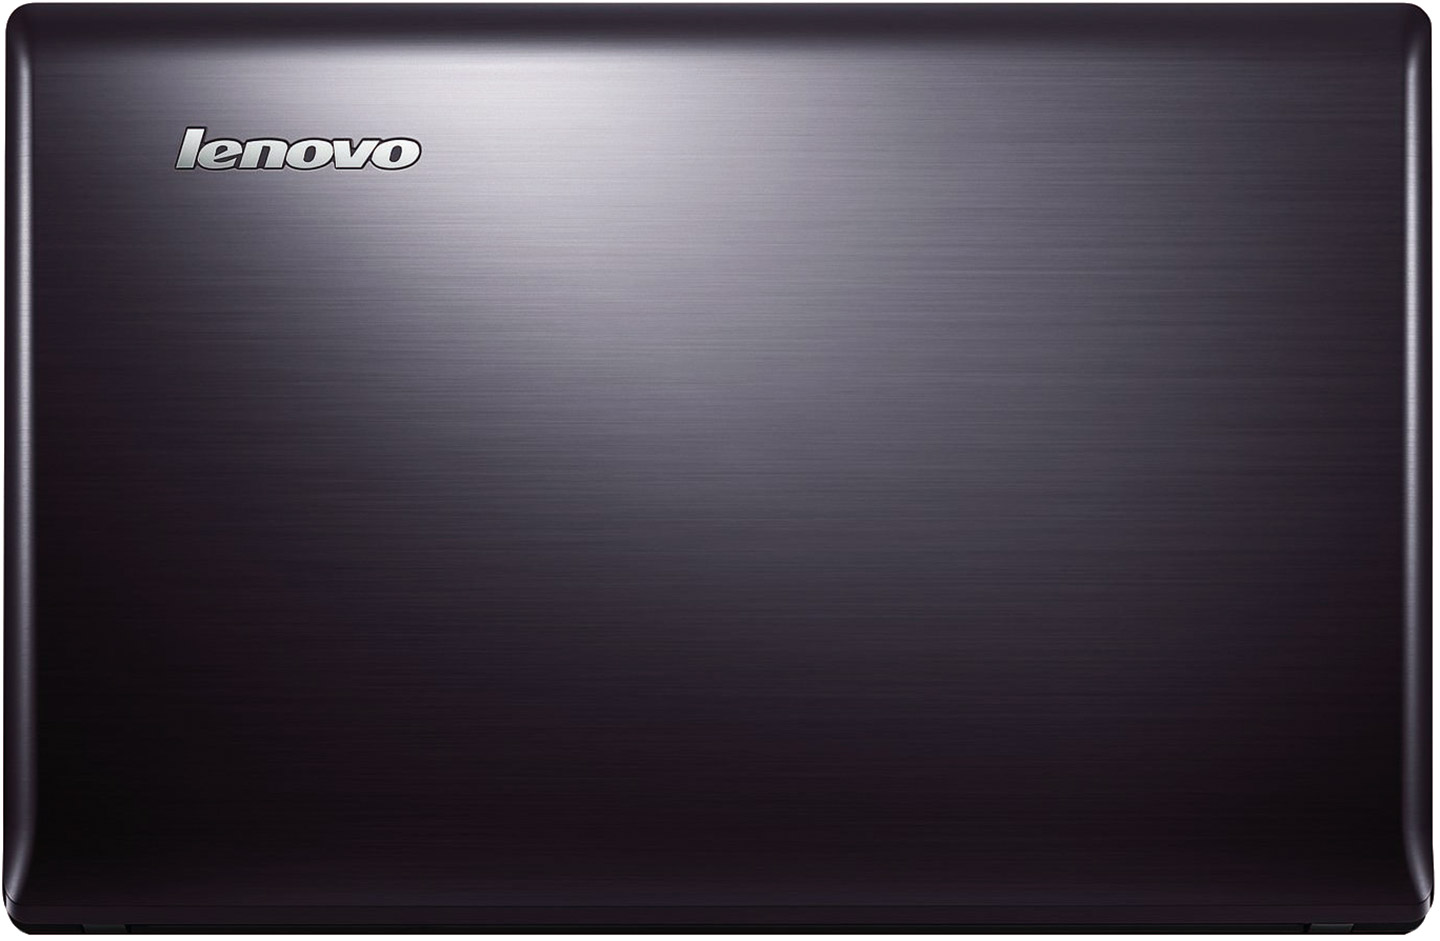 Горящий ноутбук леново. Ноутбук Lenovo IDEAPAD g780. Lenovo IDEAPAD g580g. Ноутбук Lenovo g780 Intel Pentium. Ноутбук Lenovo IDEAPAD g780 (59-350014).